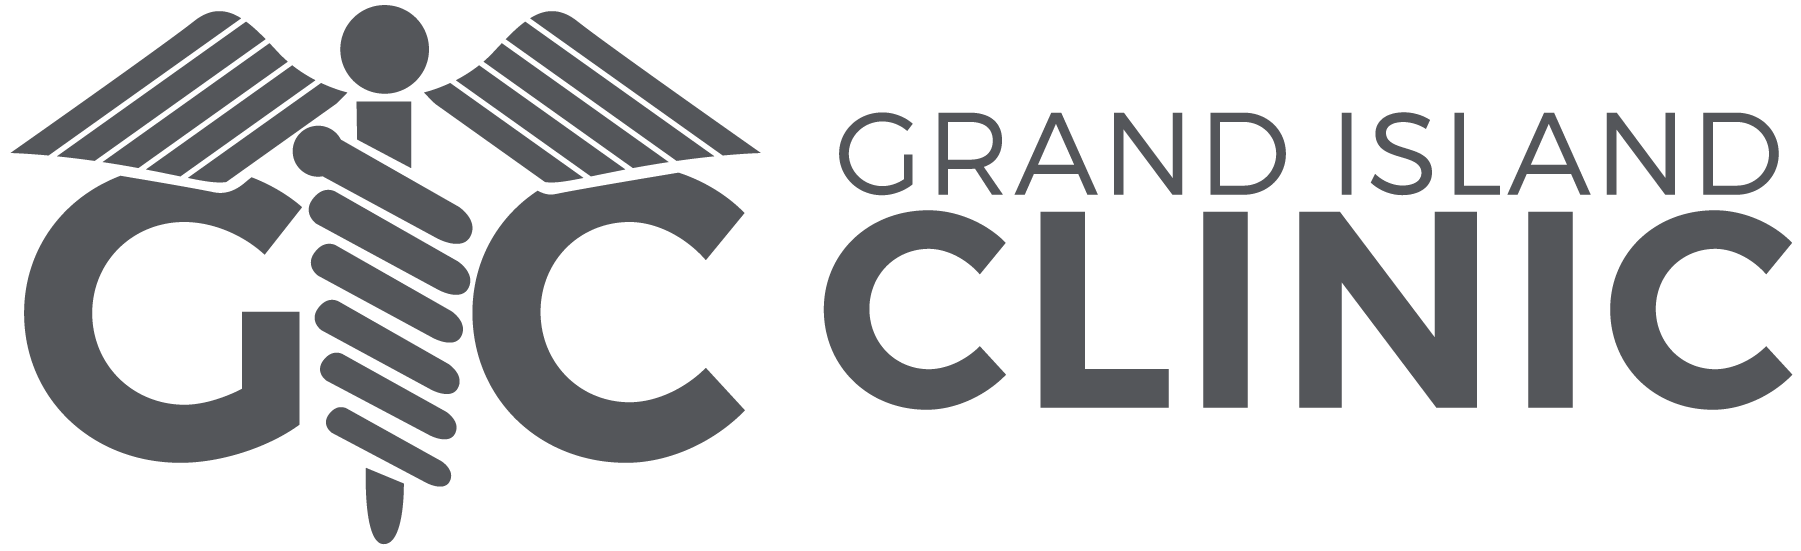 Grand Island Clinic